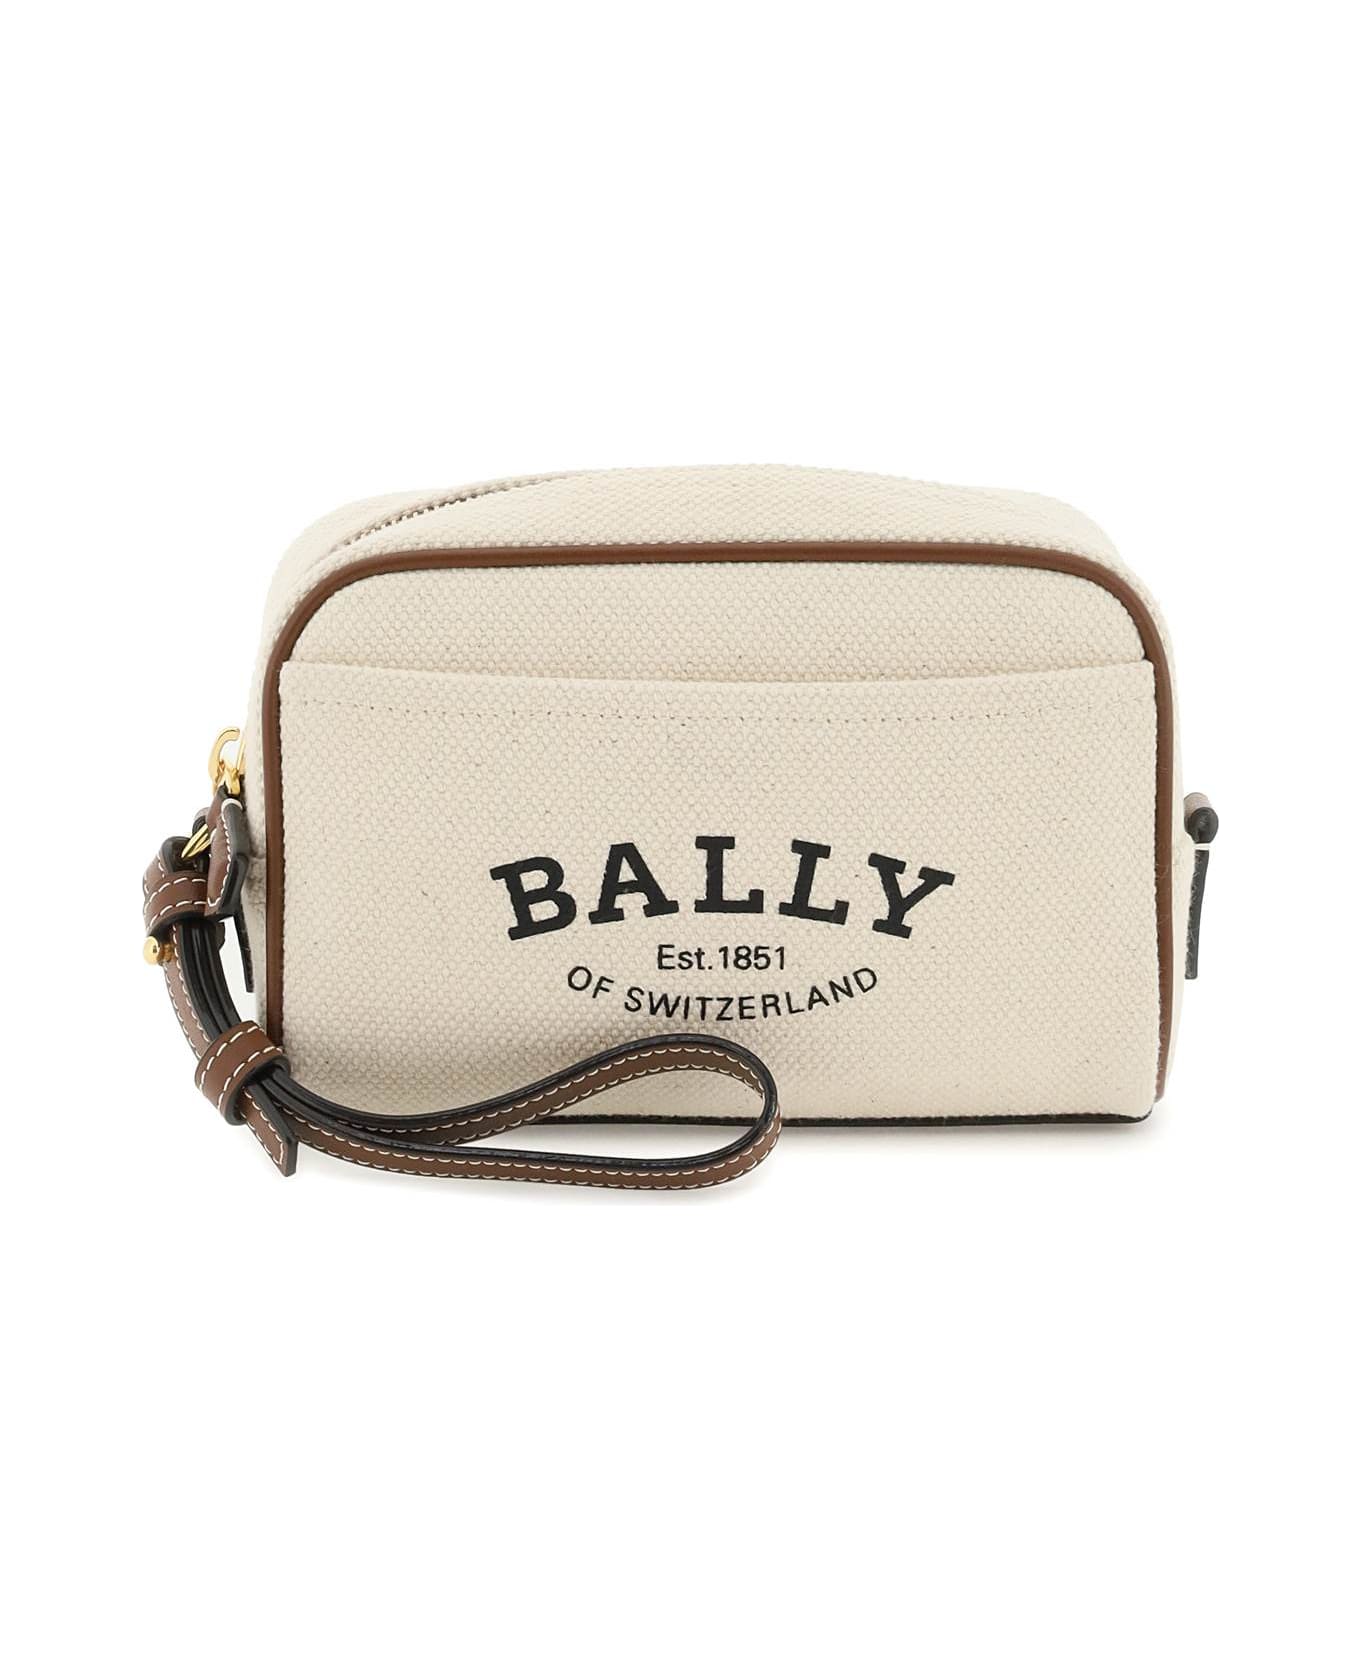 Bally 'cedy' Pouch Bag - NATURAL CUERO OVIBR (Beige) クラッチバッグ